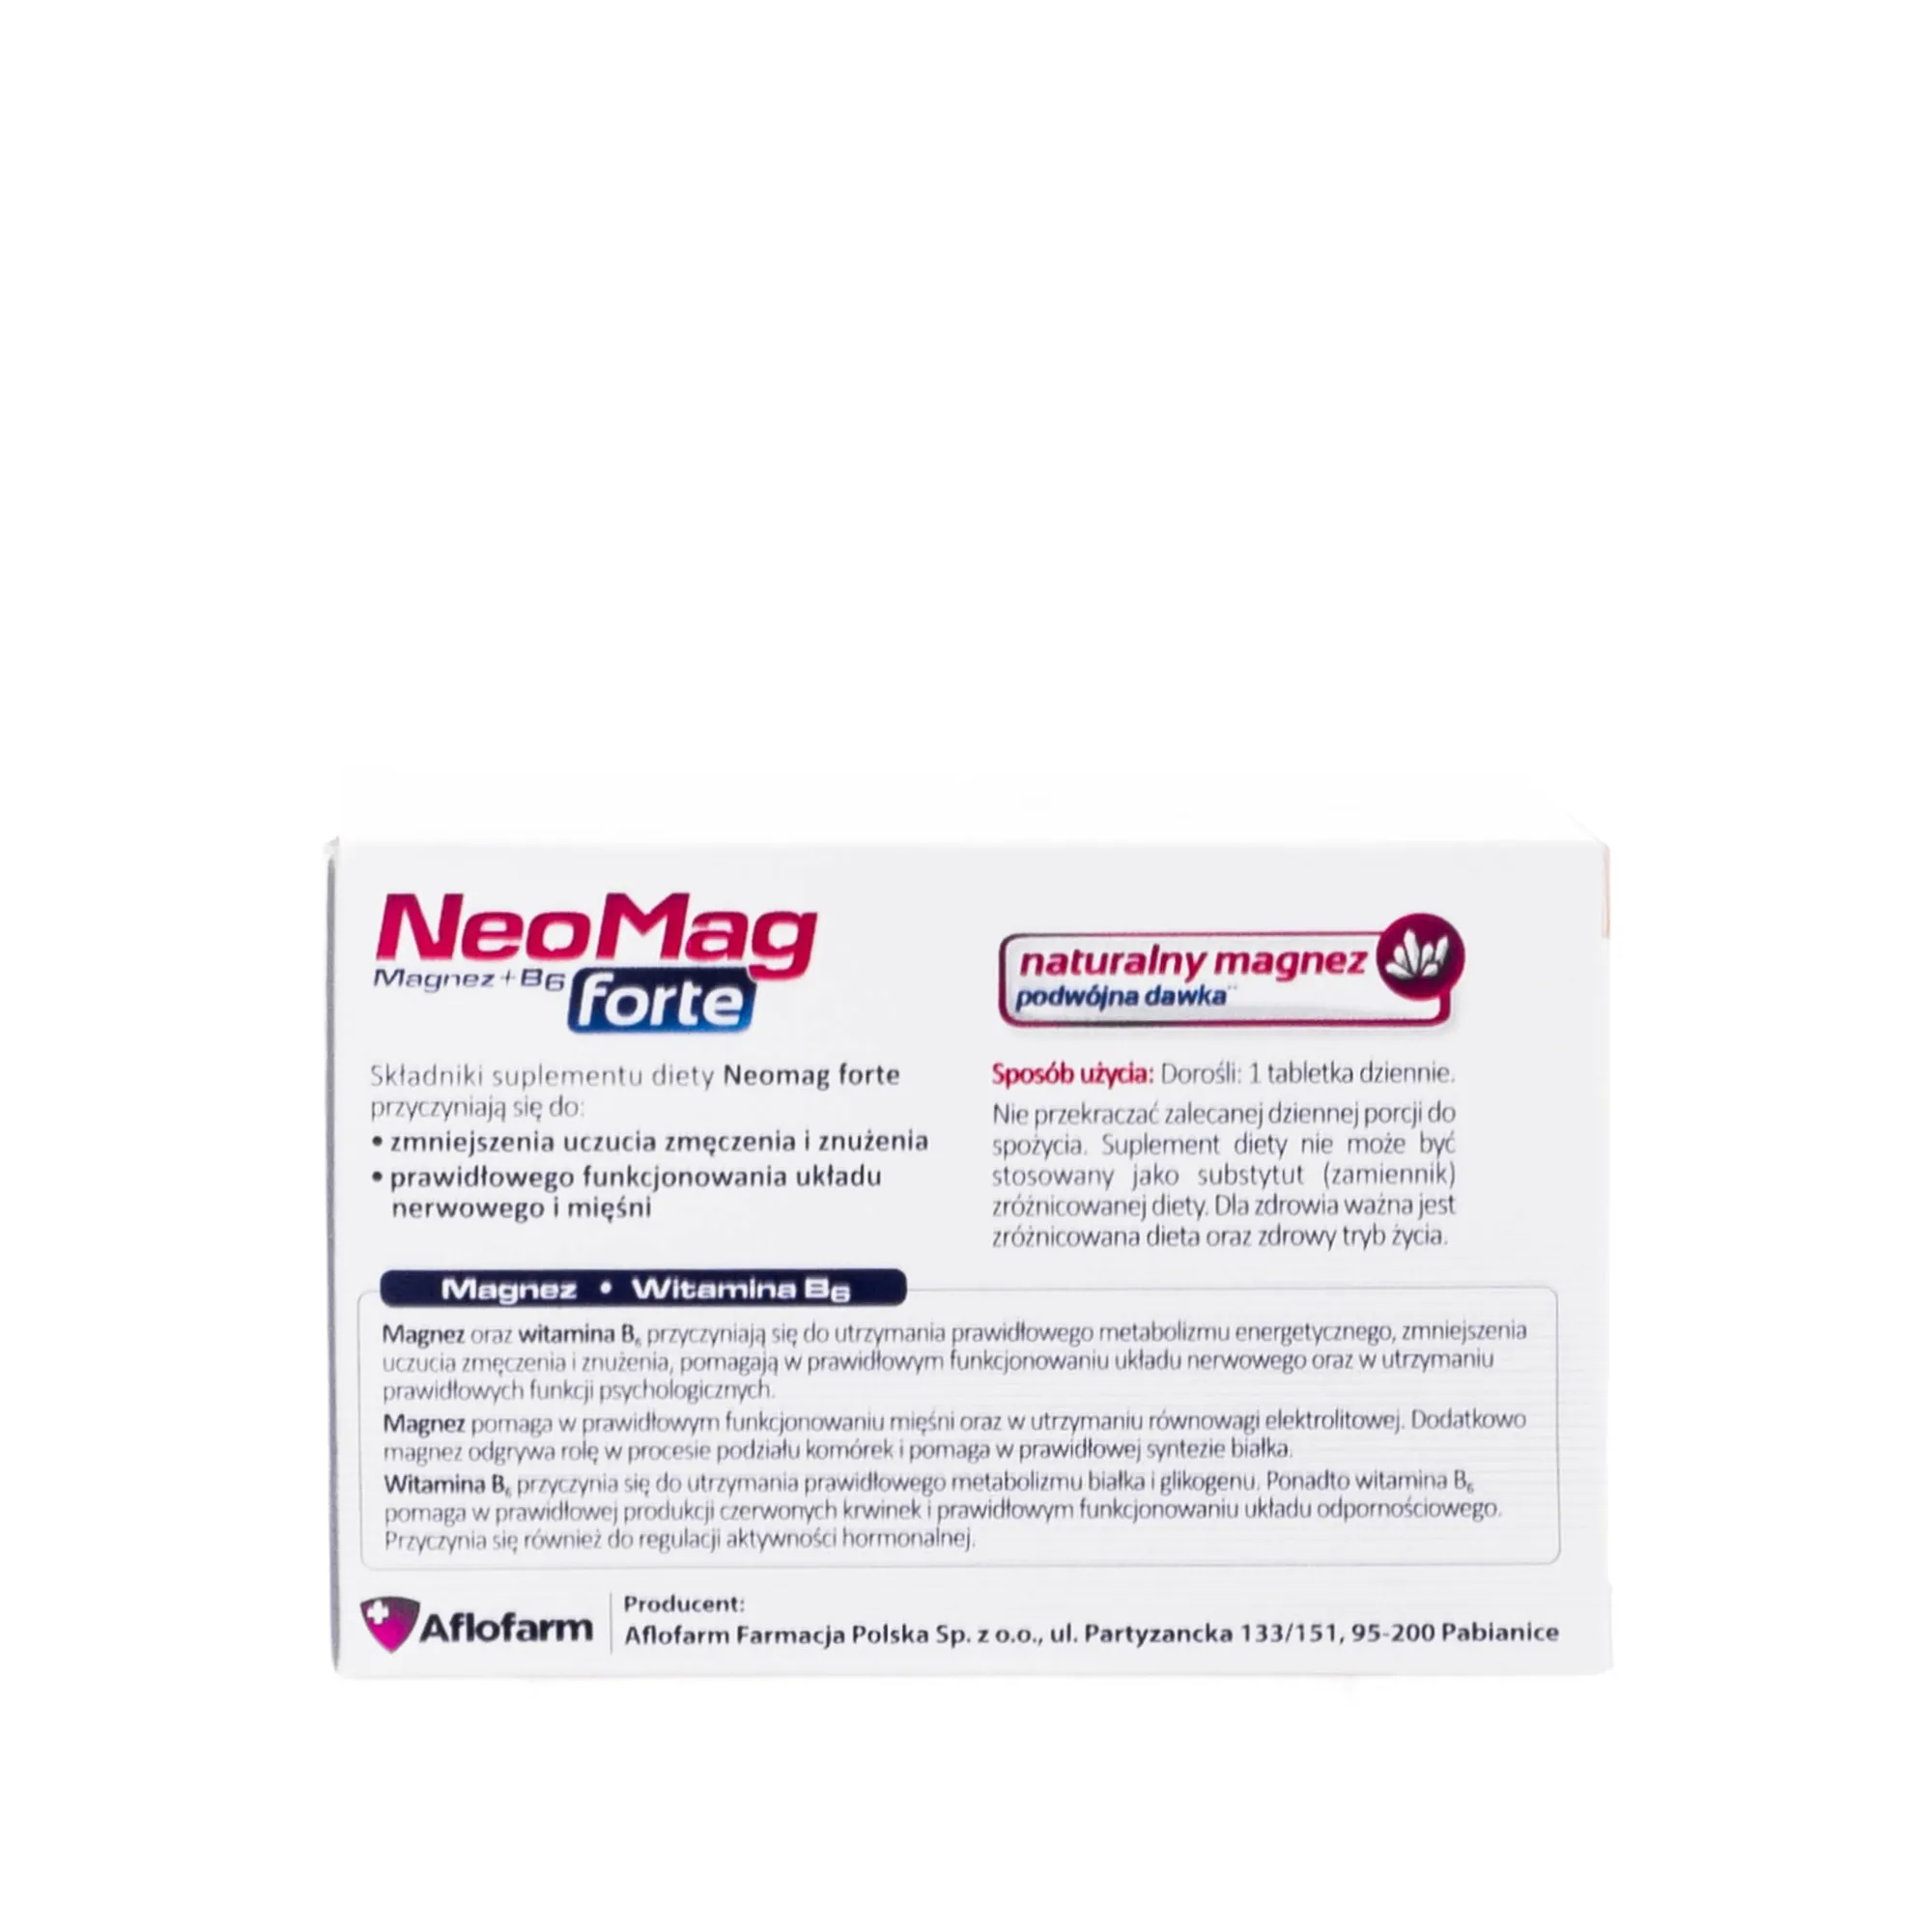 NeoMag forte - suplement diety bogaty w magnez i witaminę B6, 50 tabletek. 